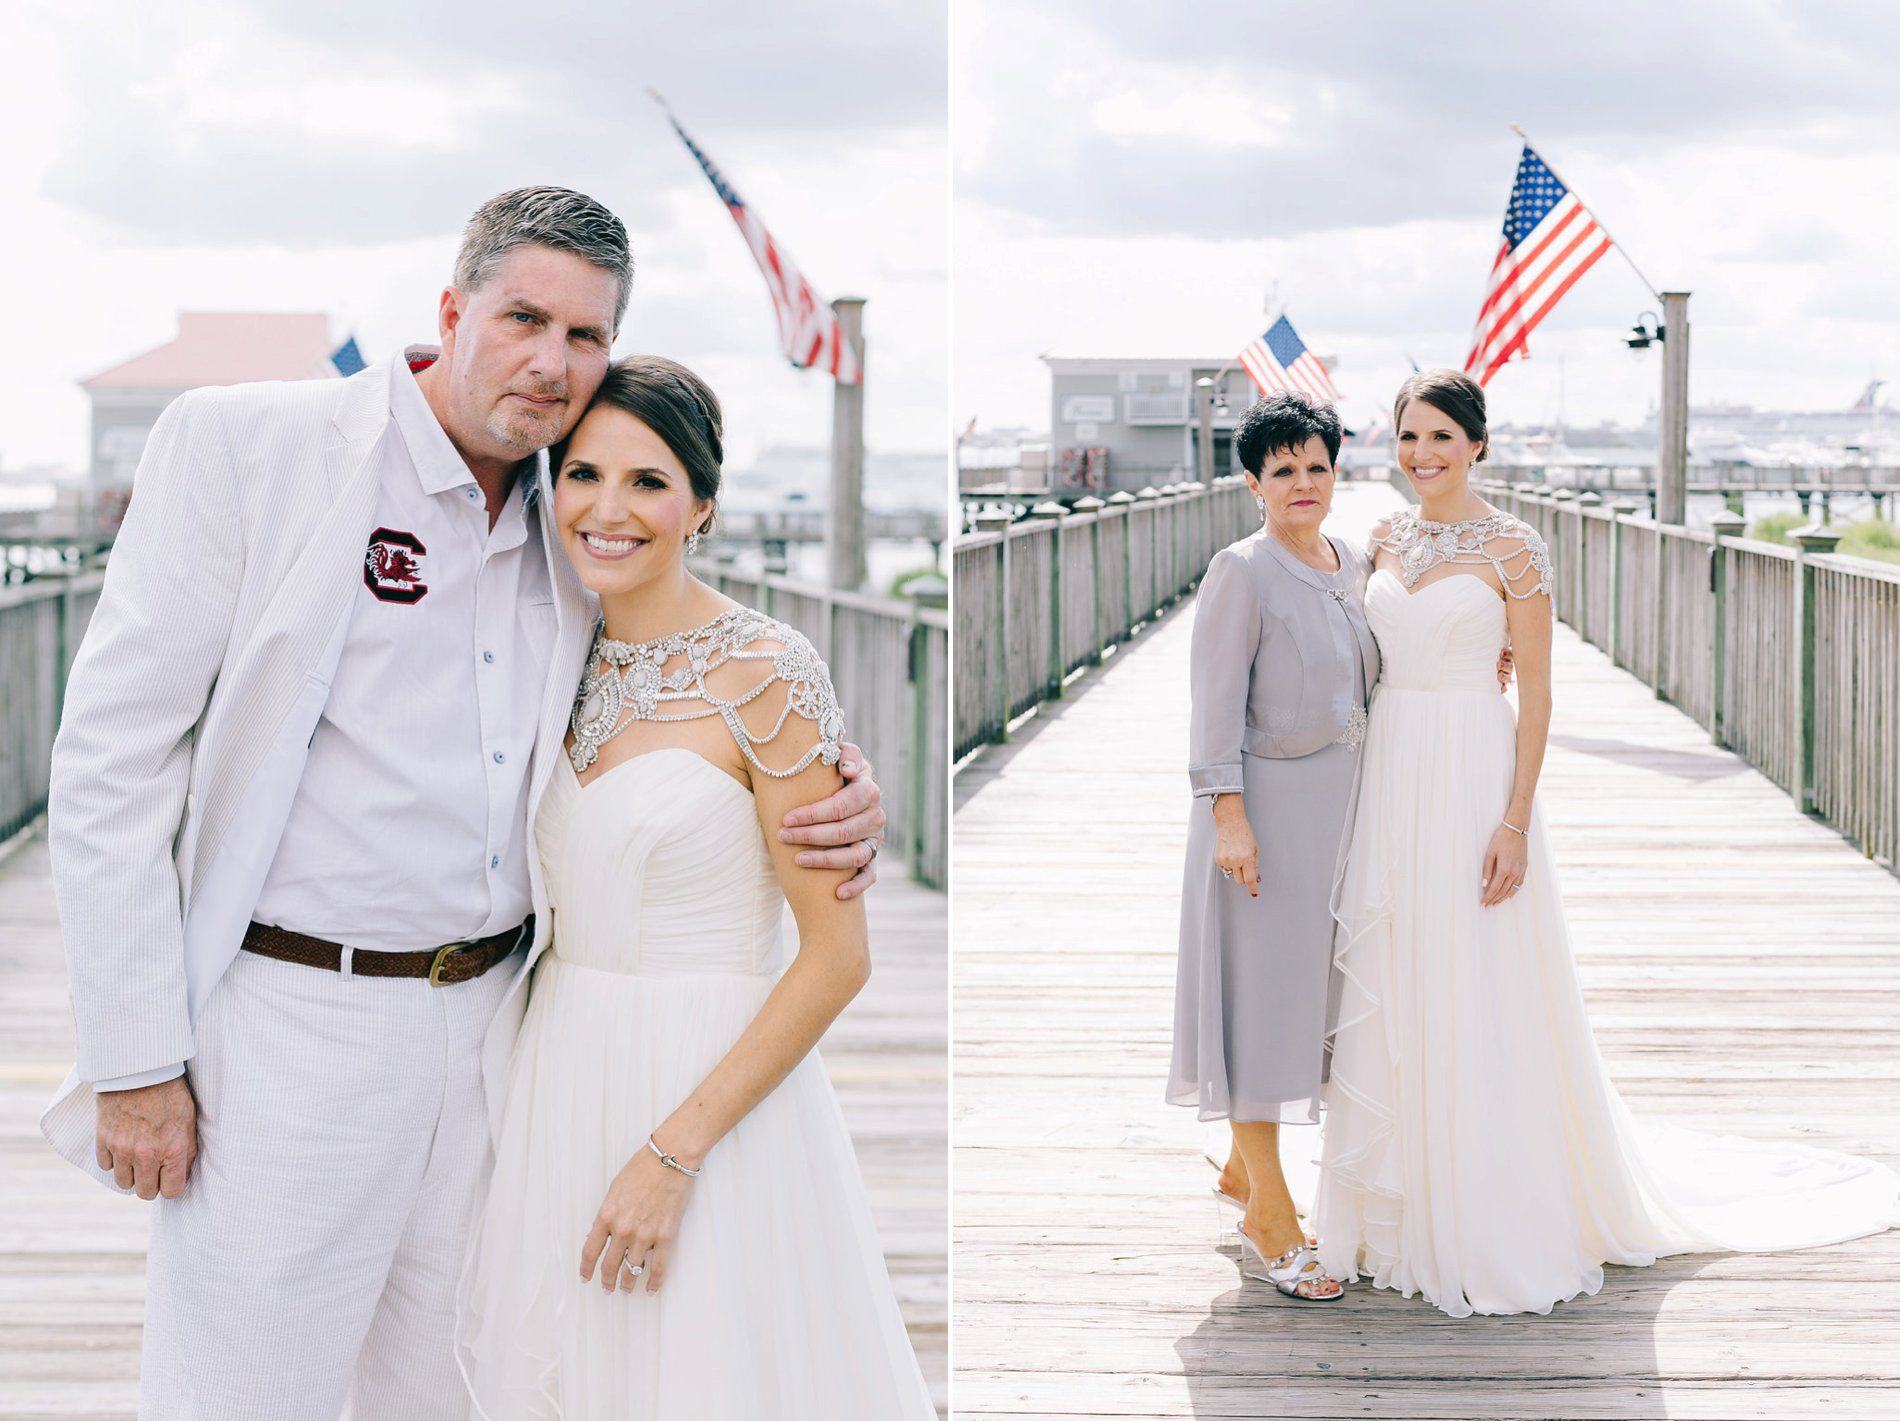 Charleston Harbor Resort and Marina wedding pictures